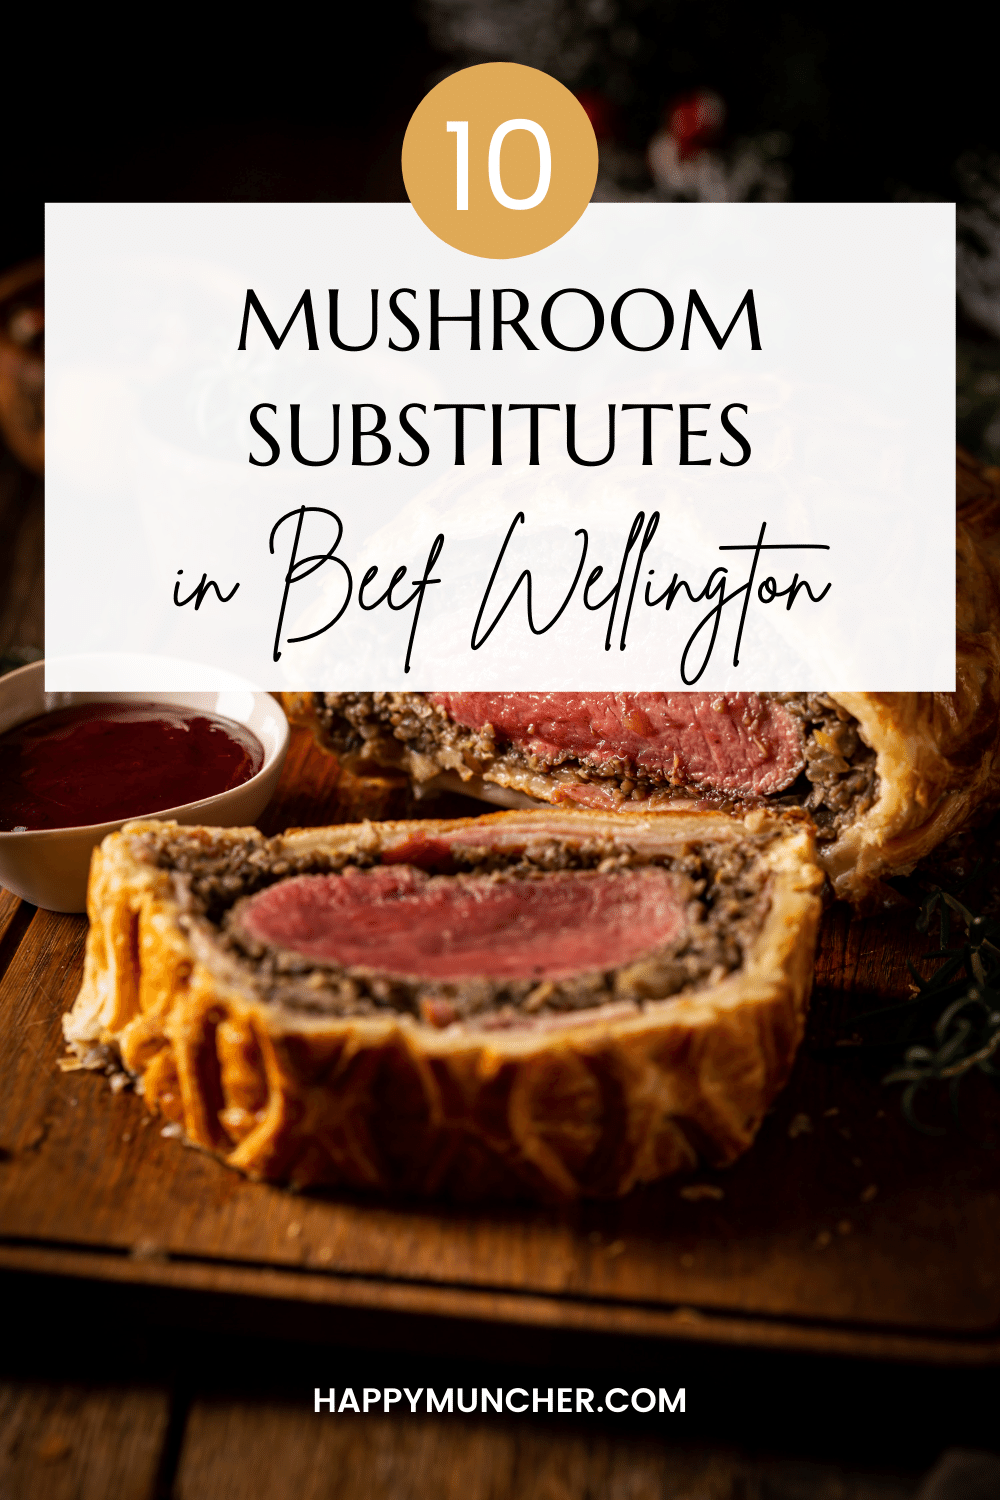 10 Beef Wellington Mushroom Substitutes – Happy Muncher